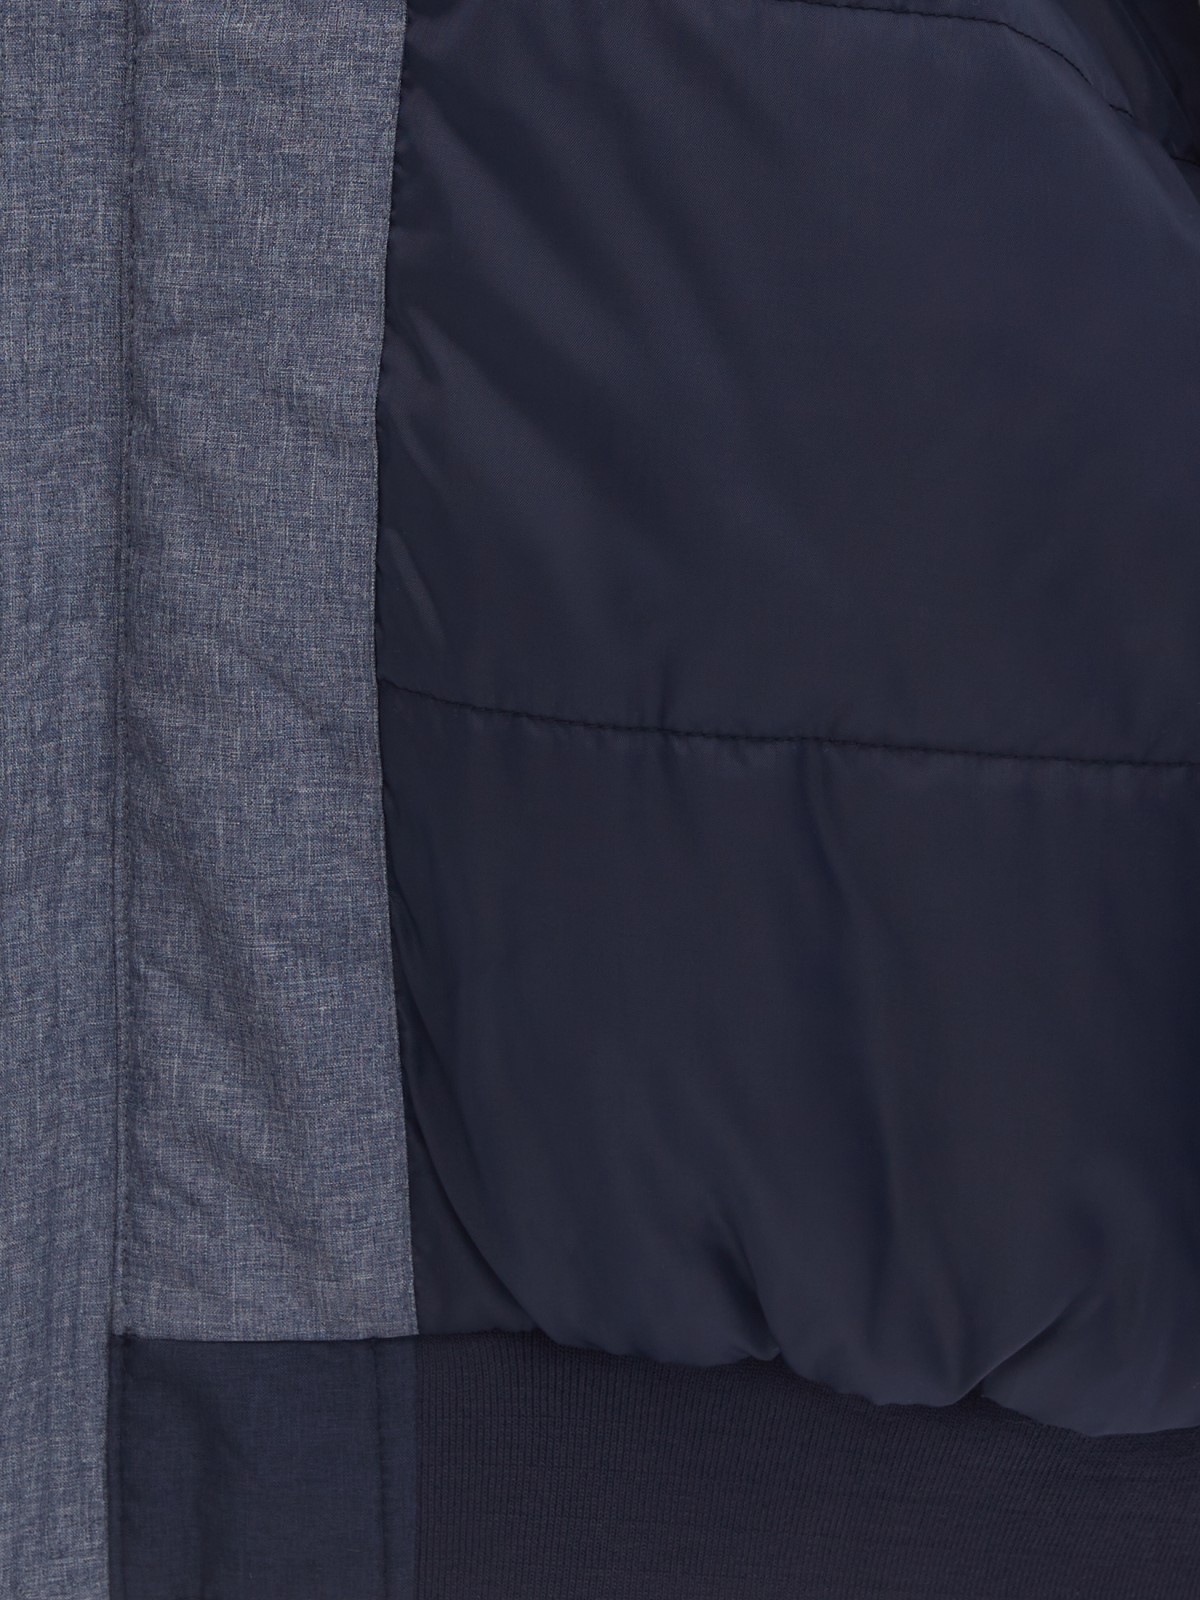 Утеплённая куртка-бомбер на синтепоне с капюшоном zolla 01412510L014, цвет синий, размер M - фото 5